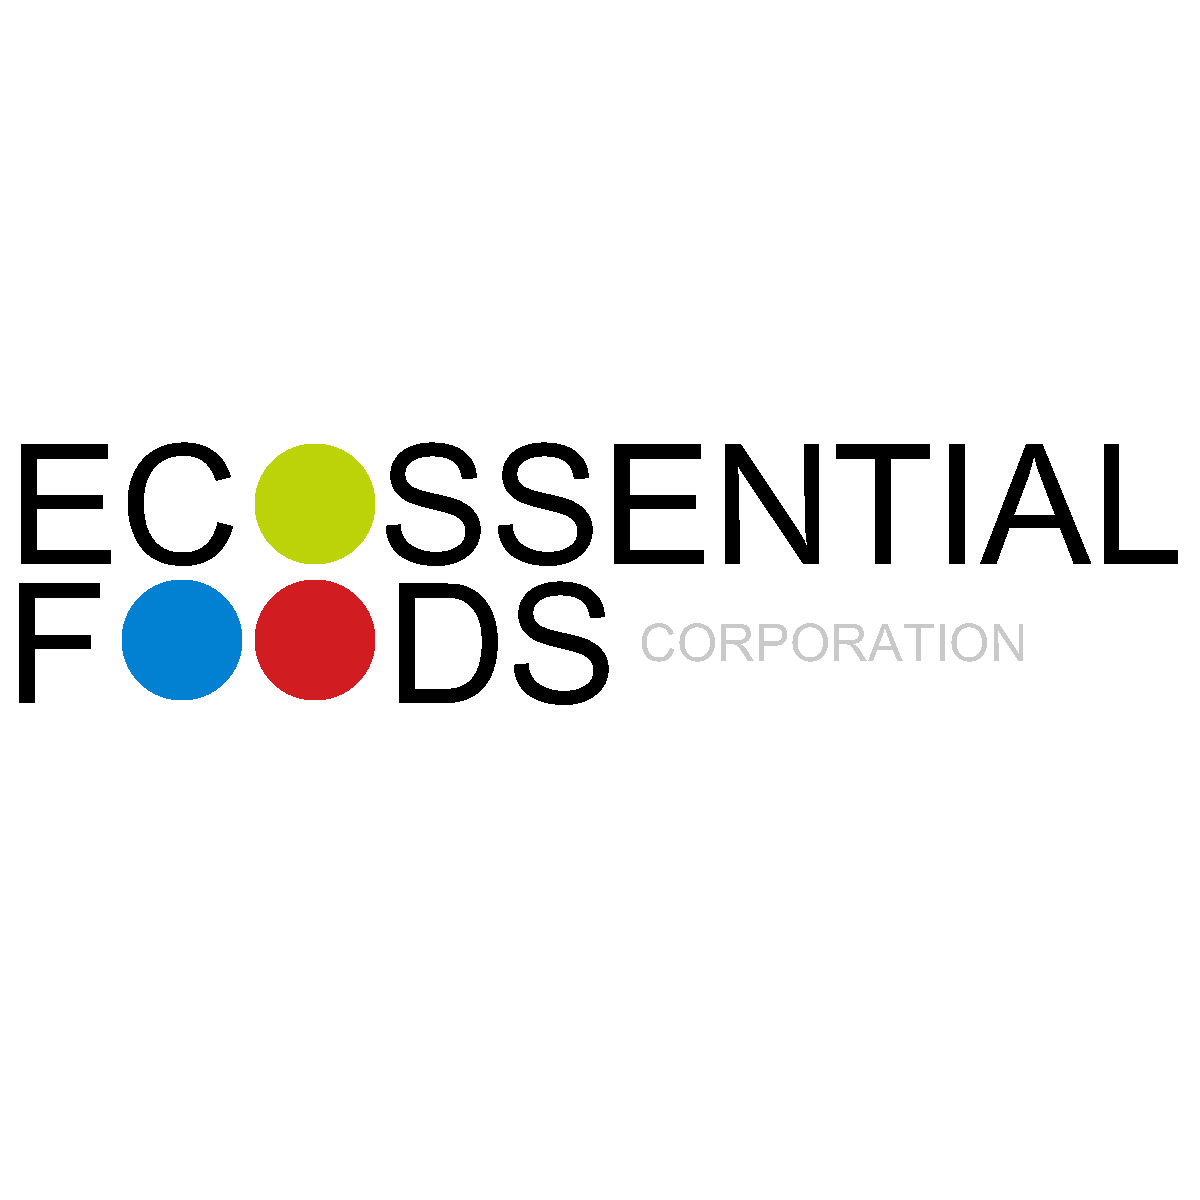 Ecossential Foods Corporation Poroco Industries Corporation